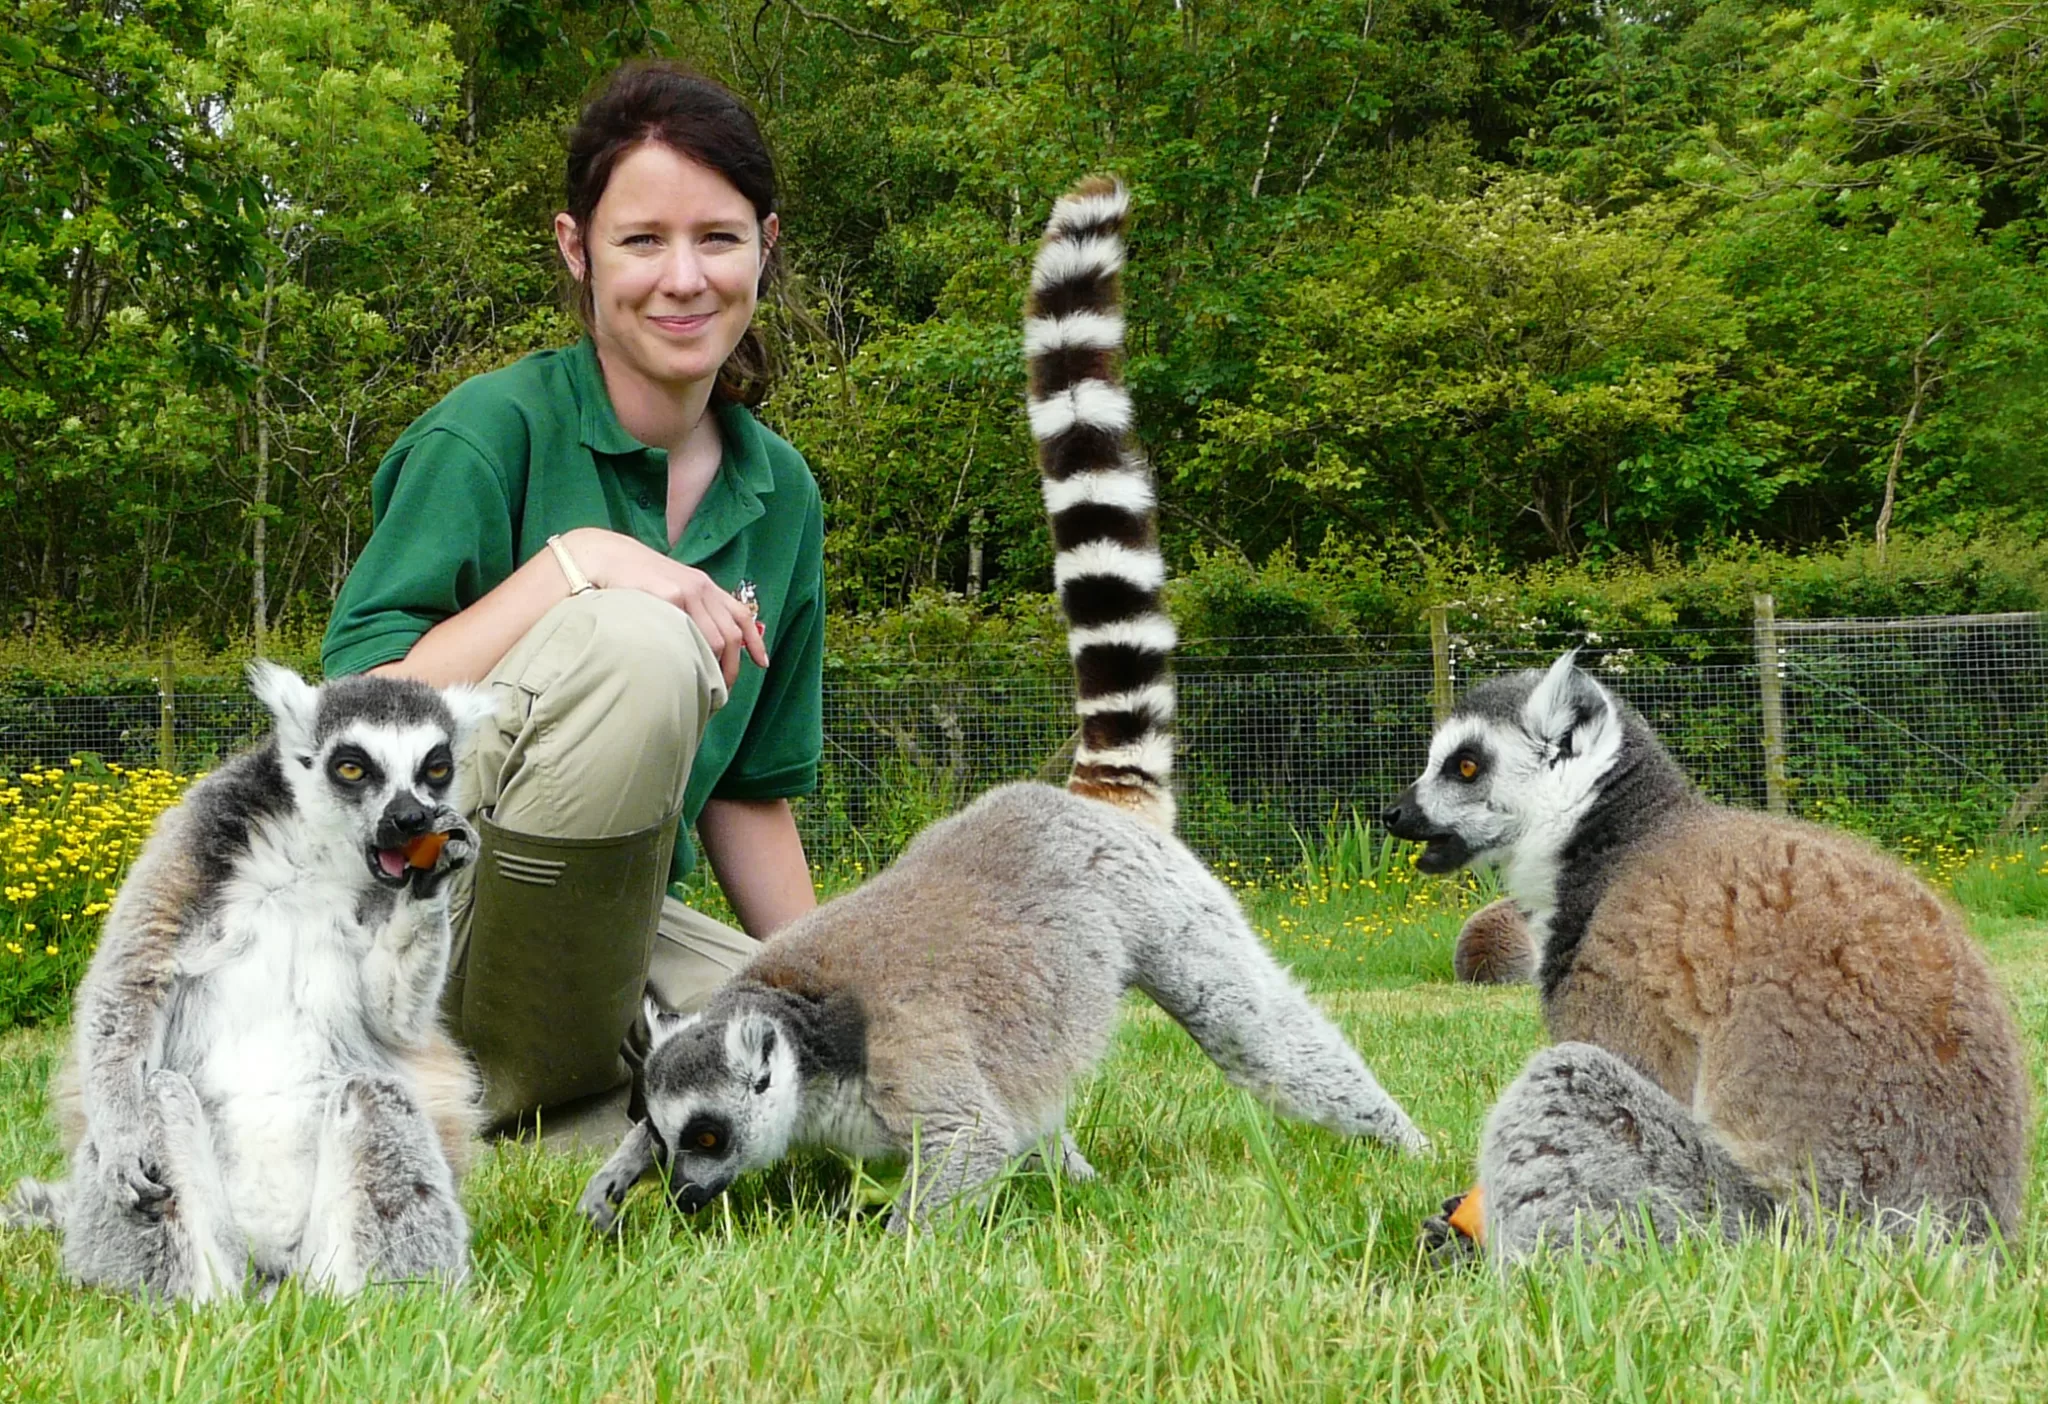 Emma with Lemurs